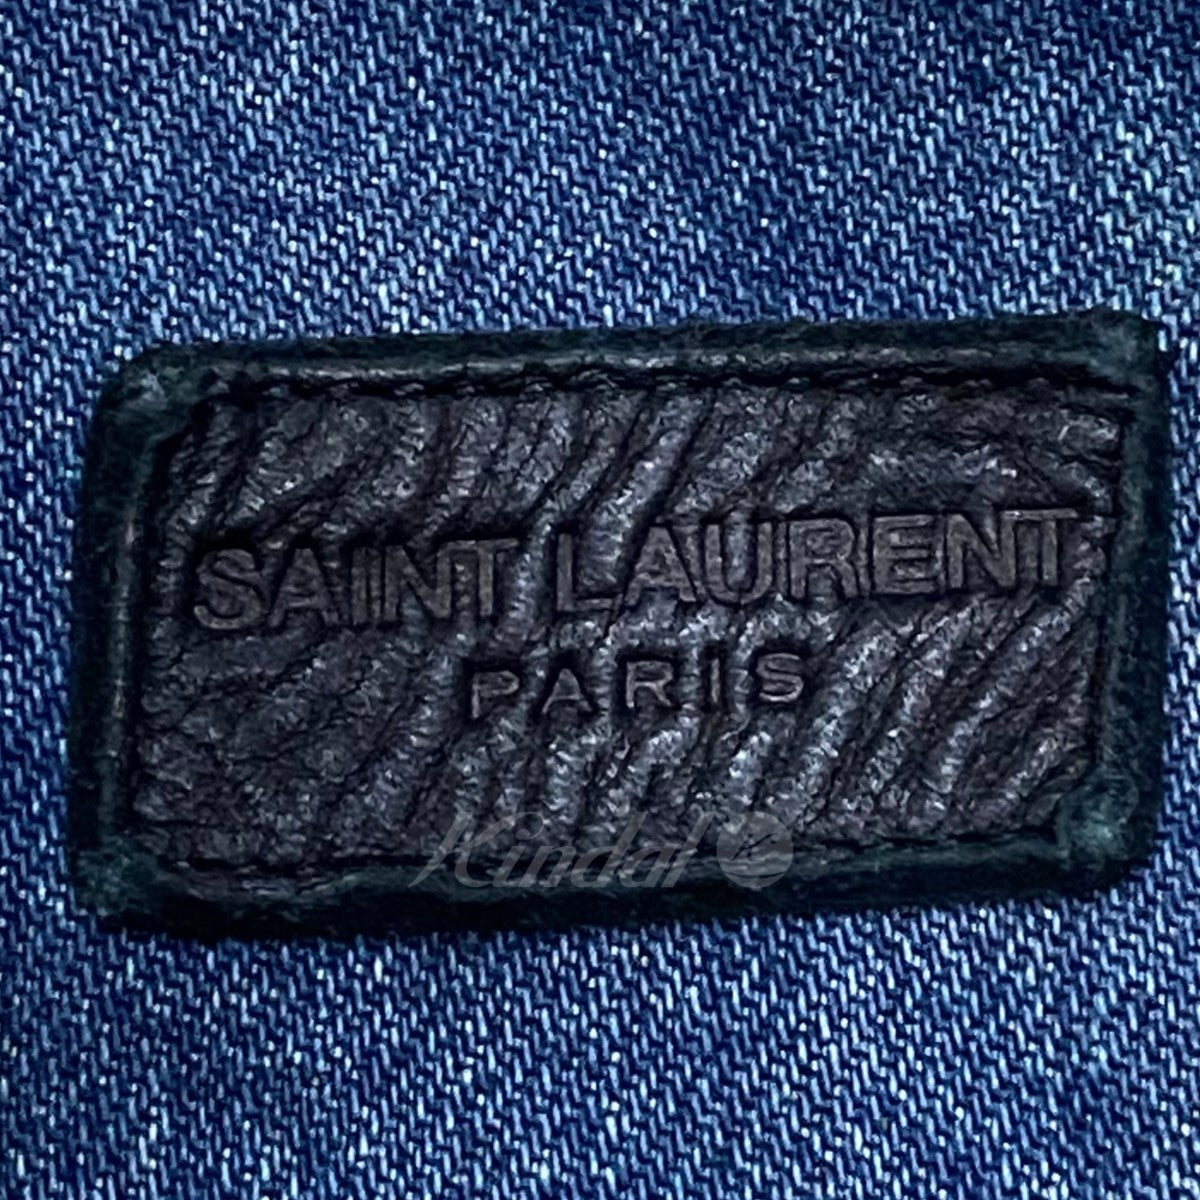 SAINT LAURENT PARIS(サンローランパリ) デストロイ加工デニム ...